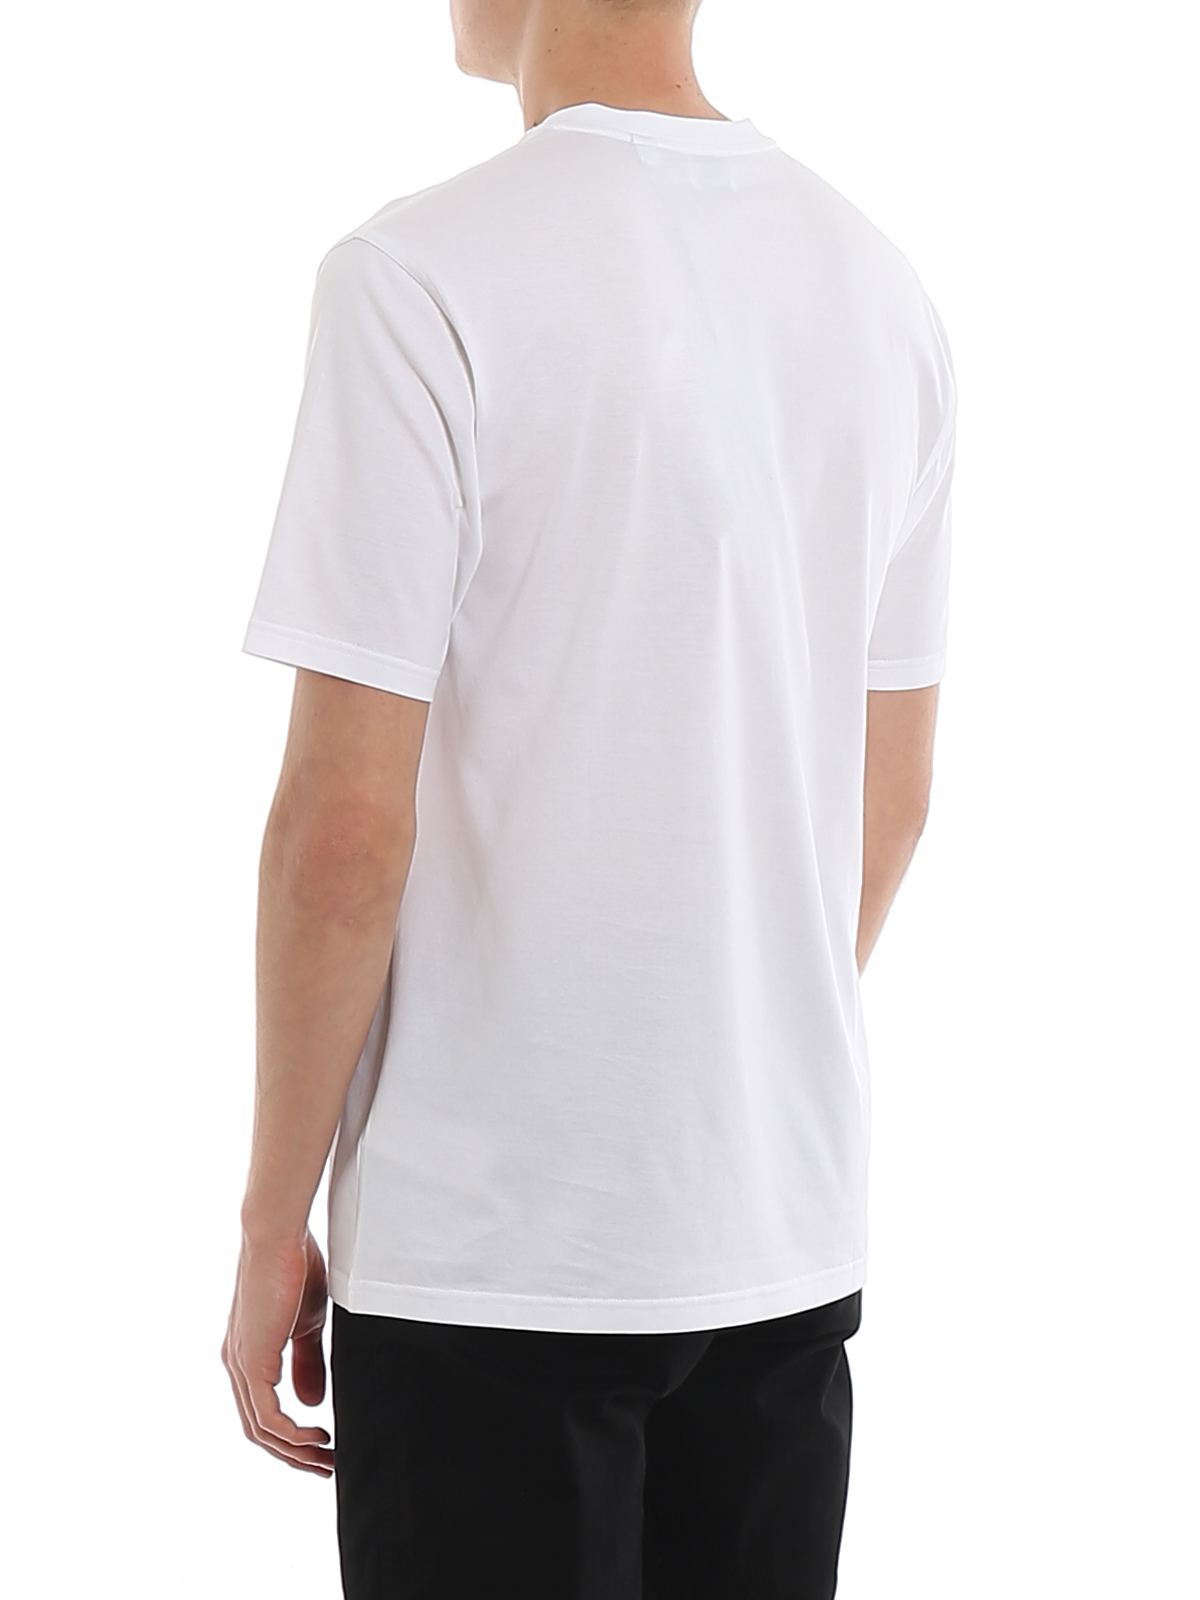 Tシャツ Burberry - Tシャツ - Letchford - 8026017 | iKRIX shop online